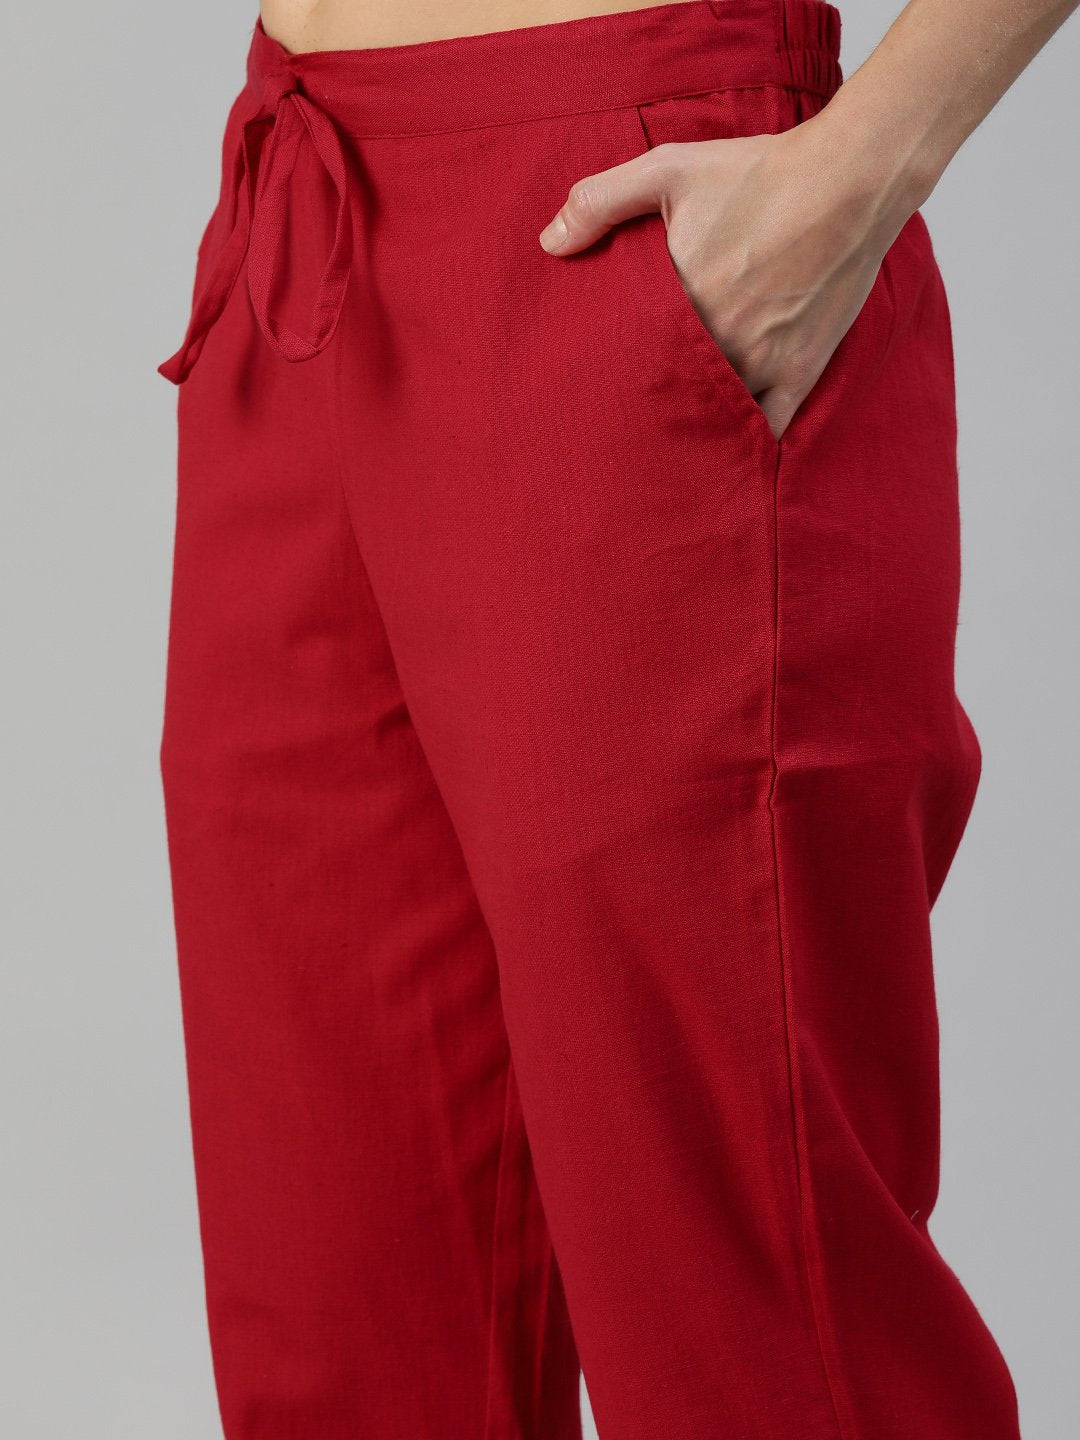 Linen Palazzo Pants, Linen Trousers, Wide Leg Pants, Red Linen Pants. - Etsy